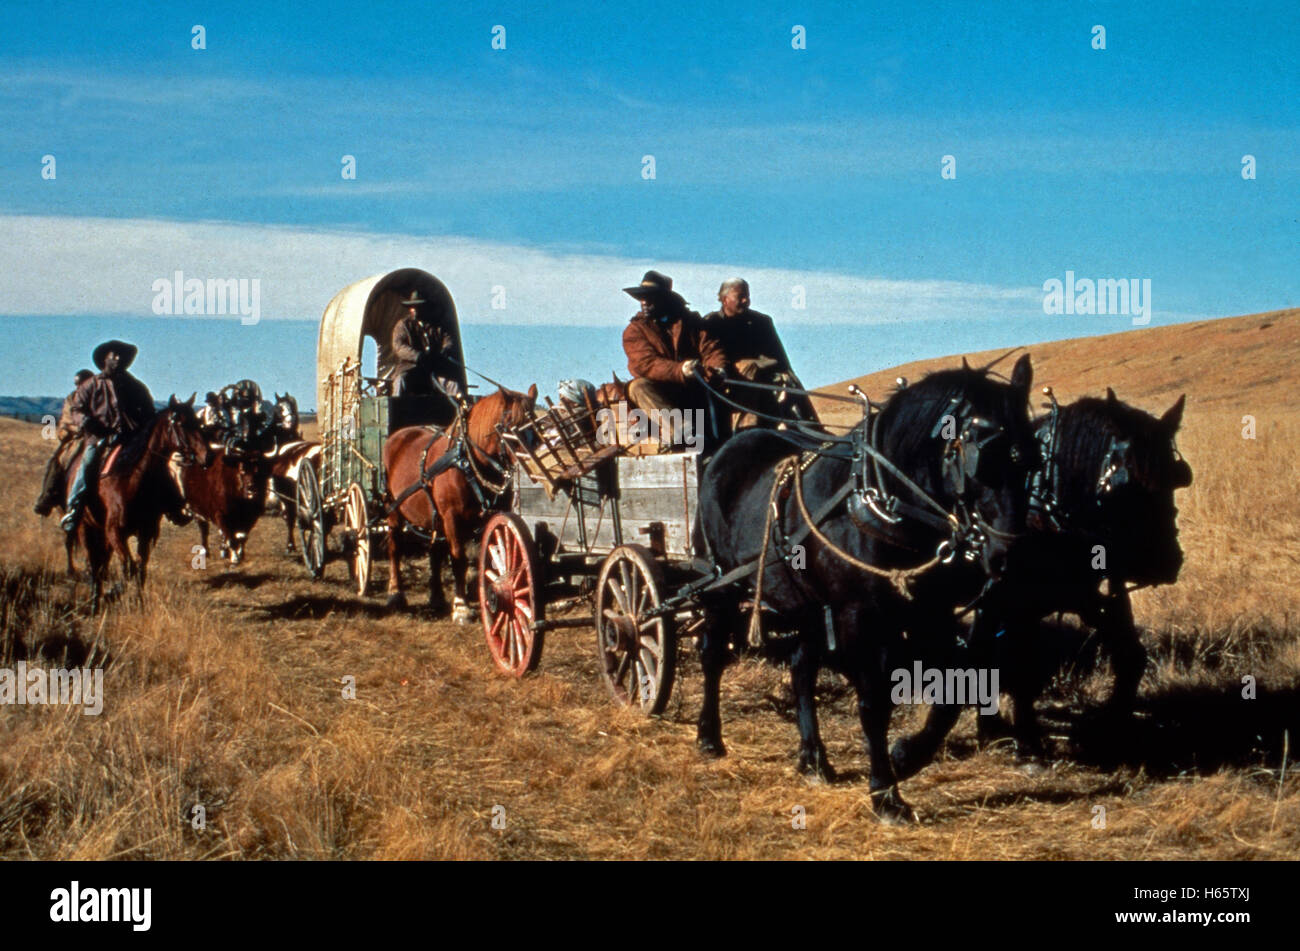 Children Of The Dust I, Minifernsehserie, USA 1995, Regie: David Greene, Szenenfoto: Planwagentreck Stock Photo